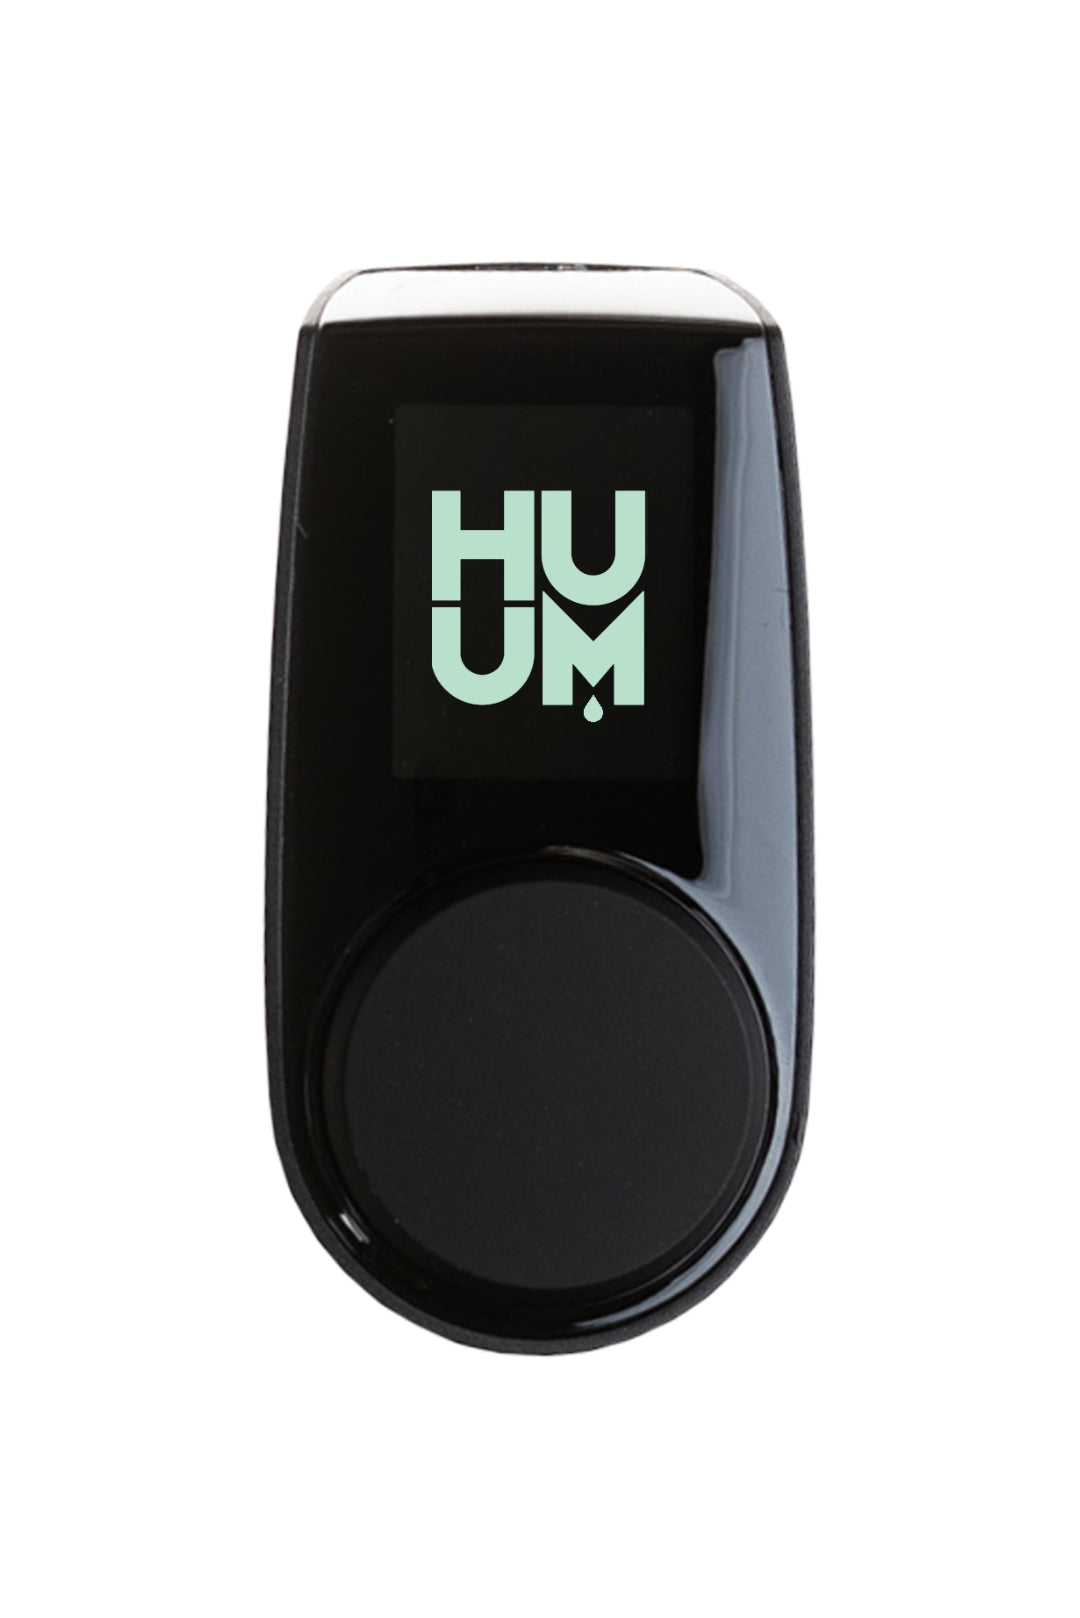 HUUM sauna control unit wifi in black color